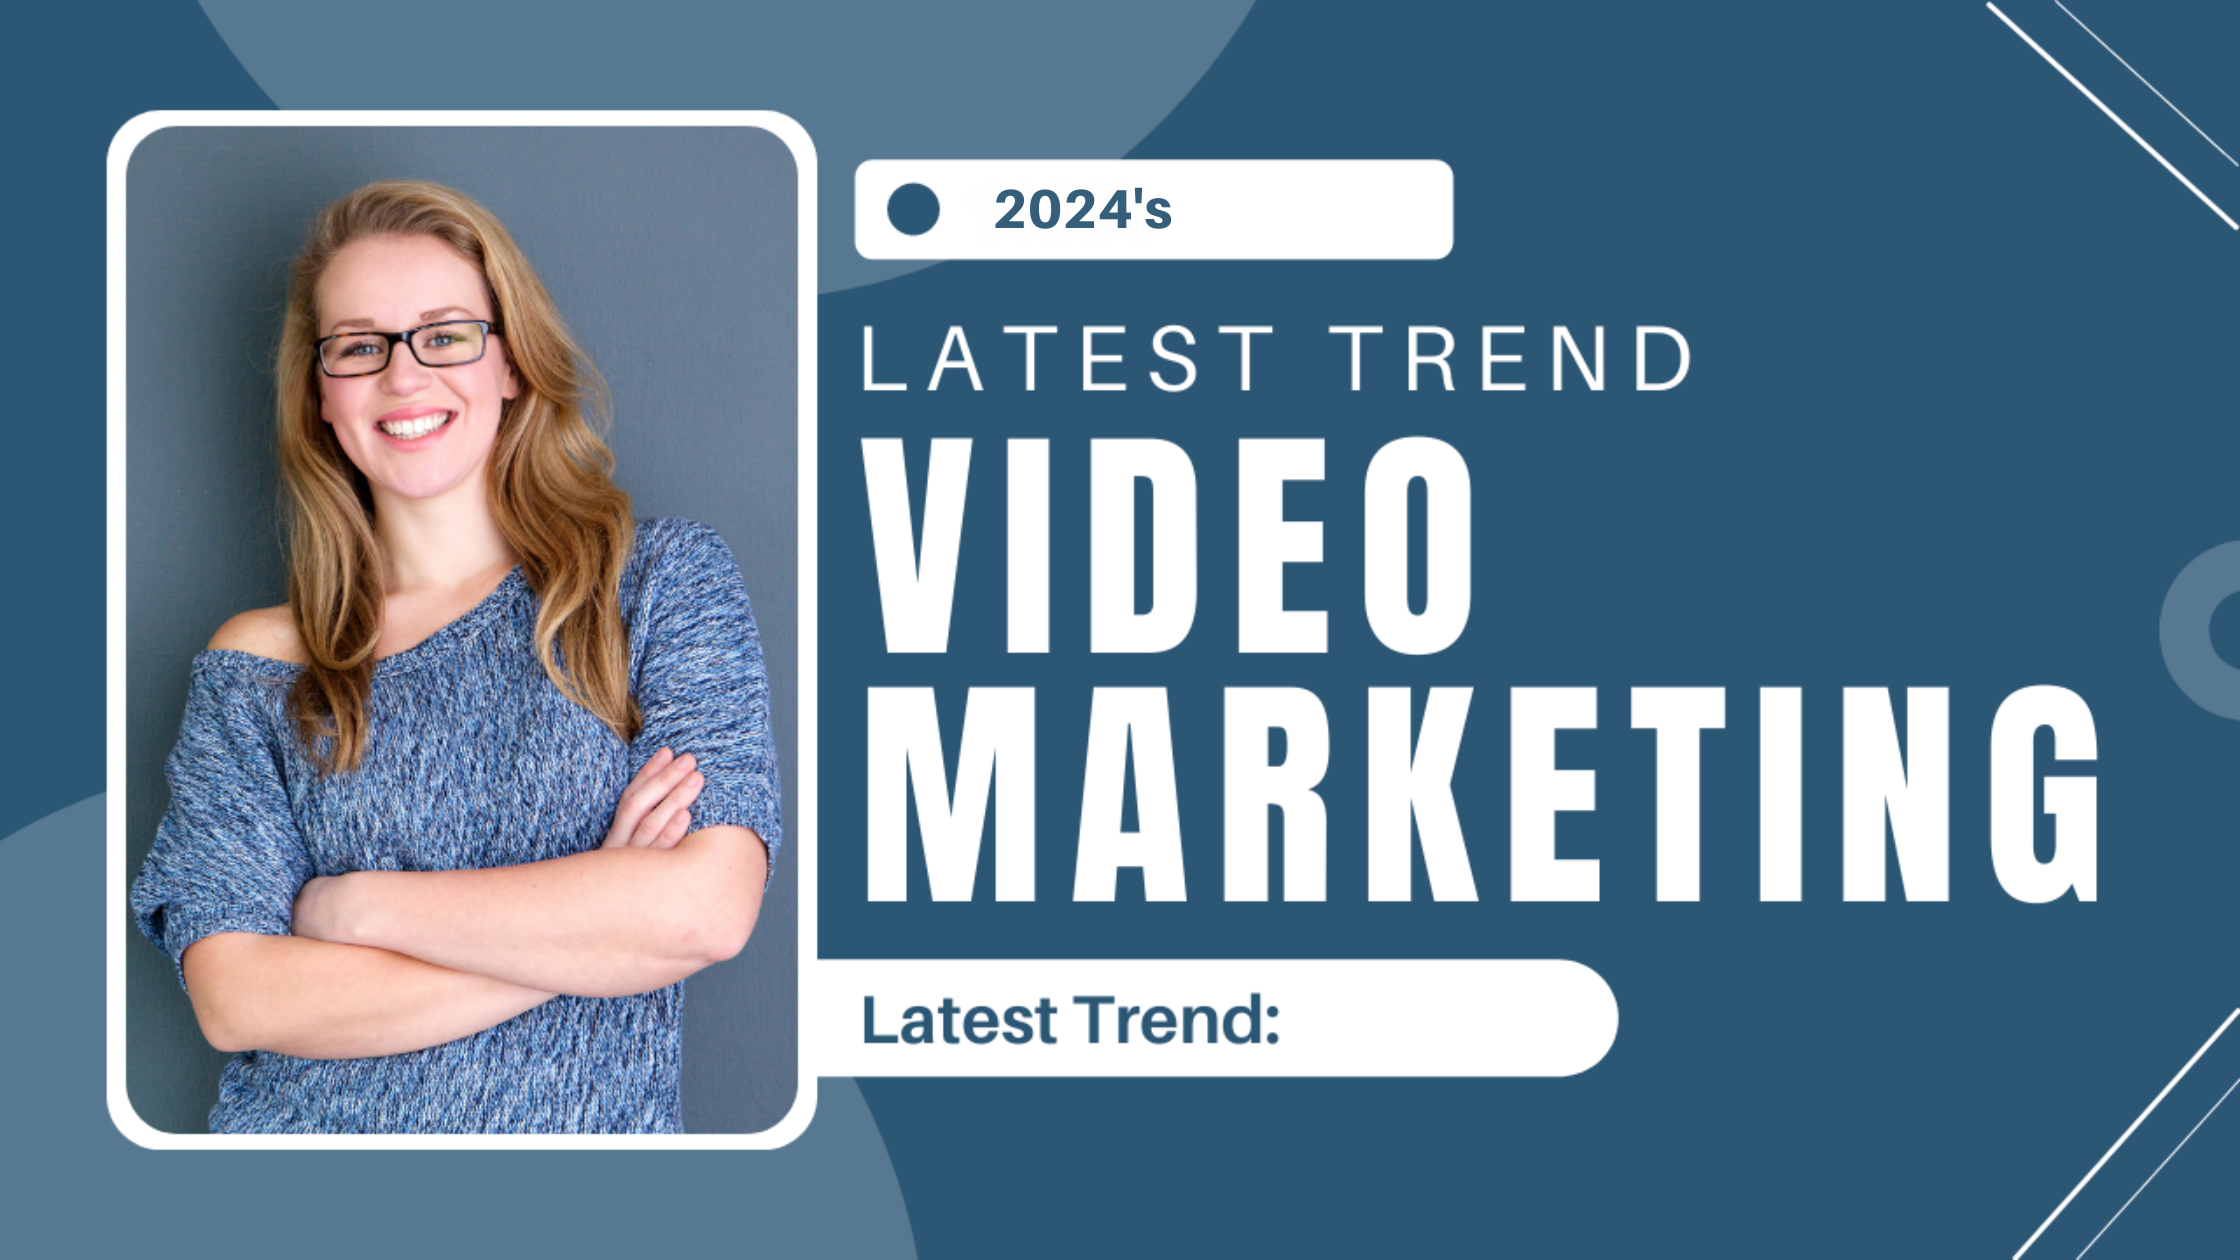 2024's Latest Trend Video Marketing